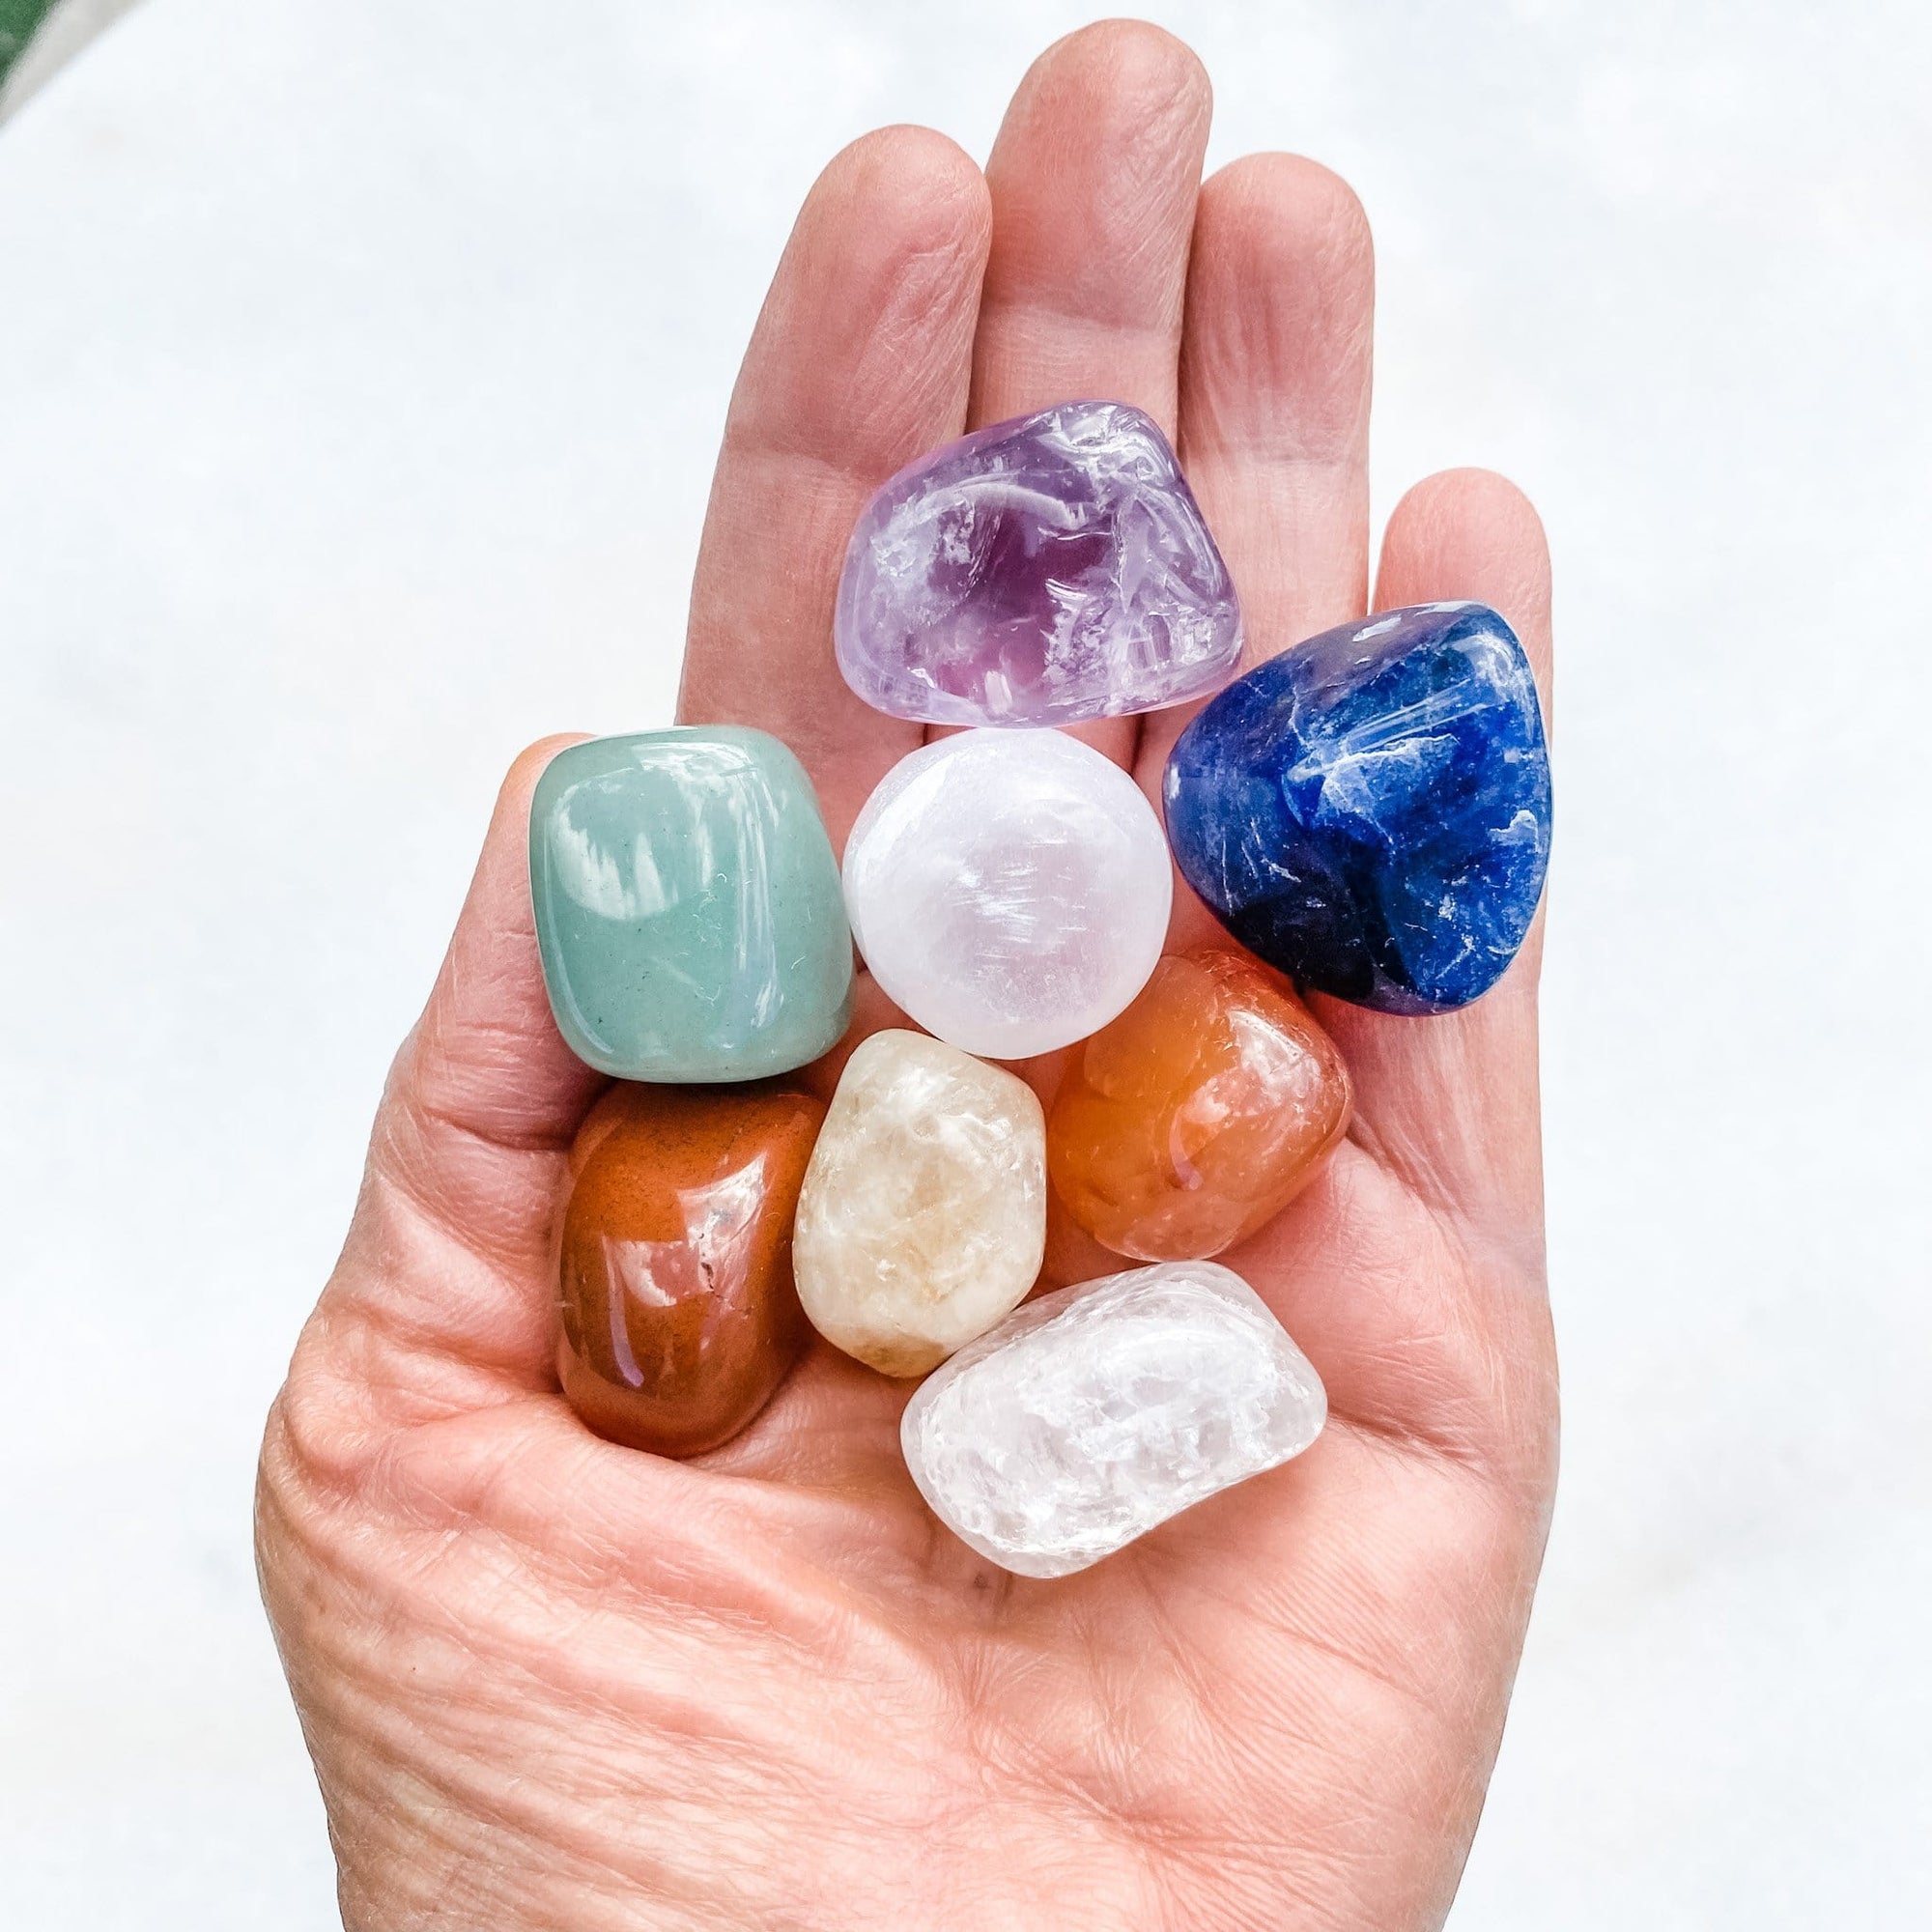 Healing Crystal Gift Box - Beginners Gem Stone Set - Wellness Gift